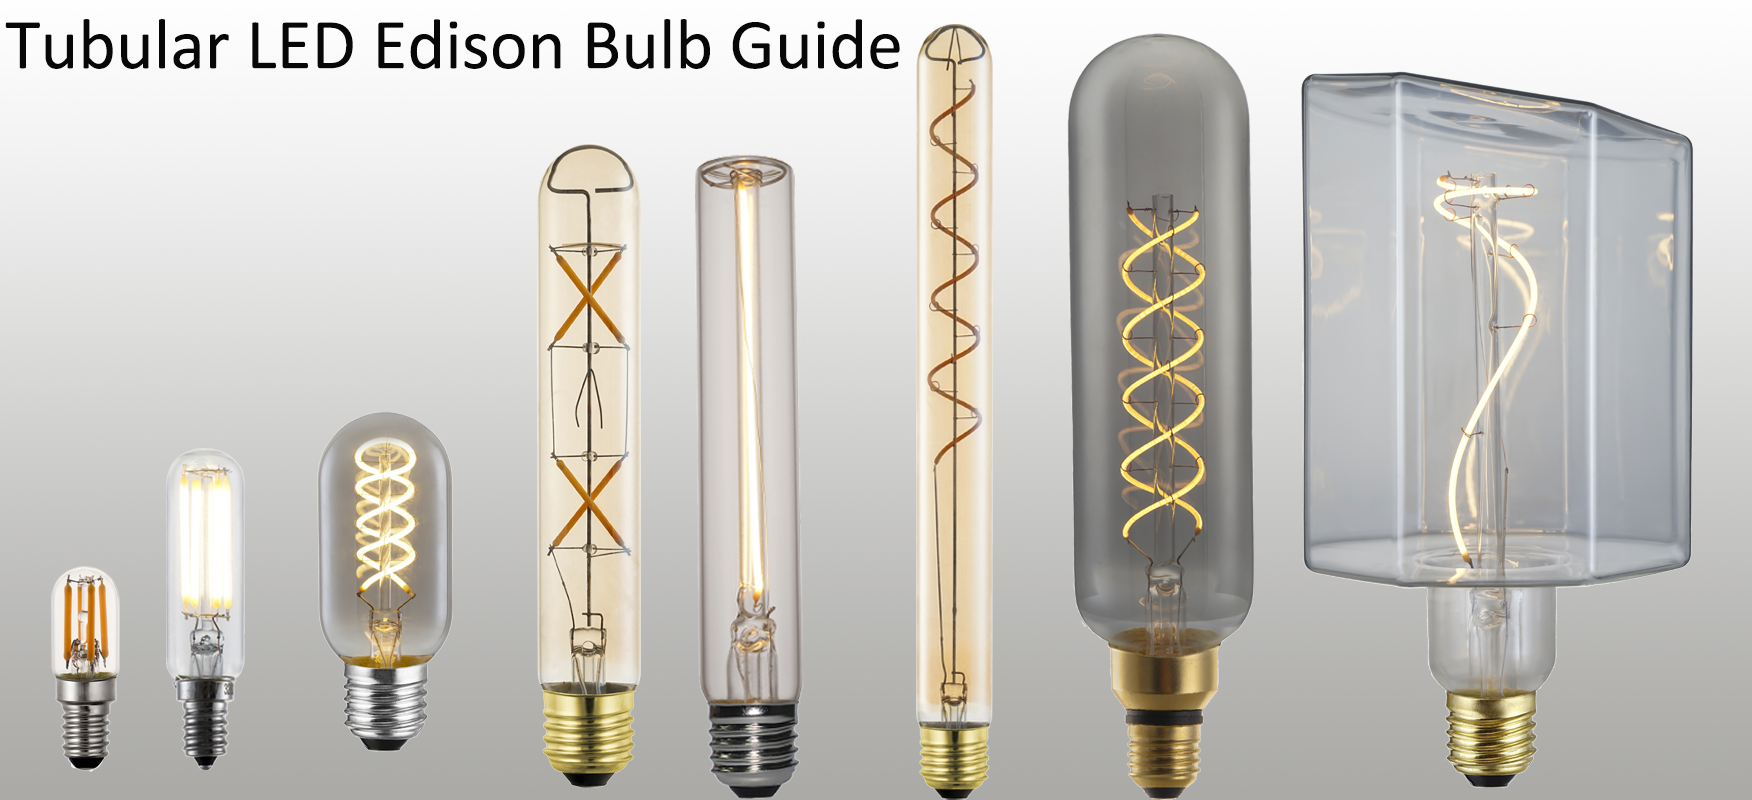 Guide of Tubular LED Edison bulb